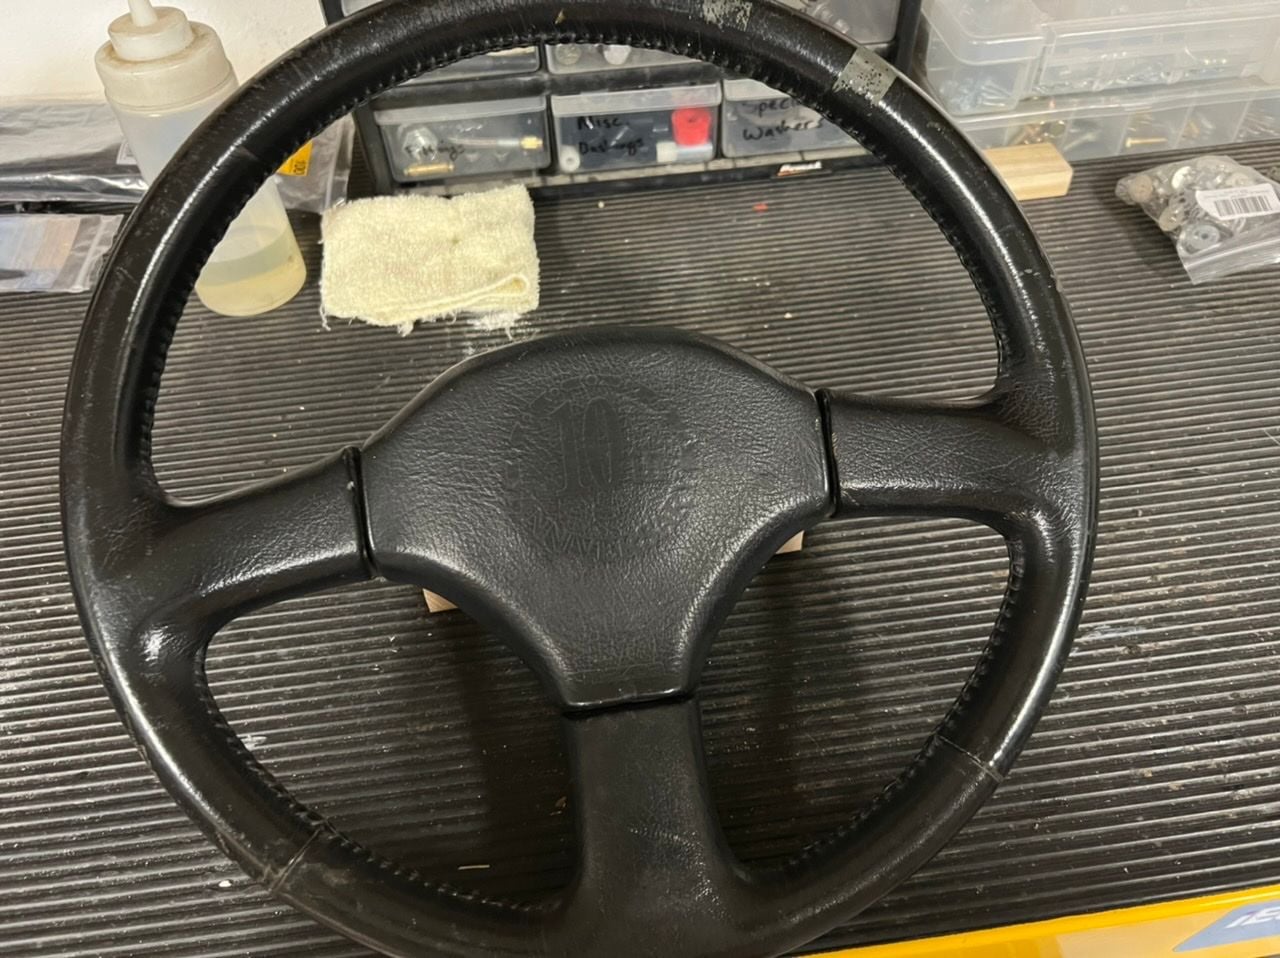 Interior/Upholstery - 10th Anniversary steering wheel - Used - 1988 Mazda RX-7 - Seneca, MO 64865, United States